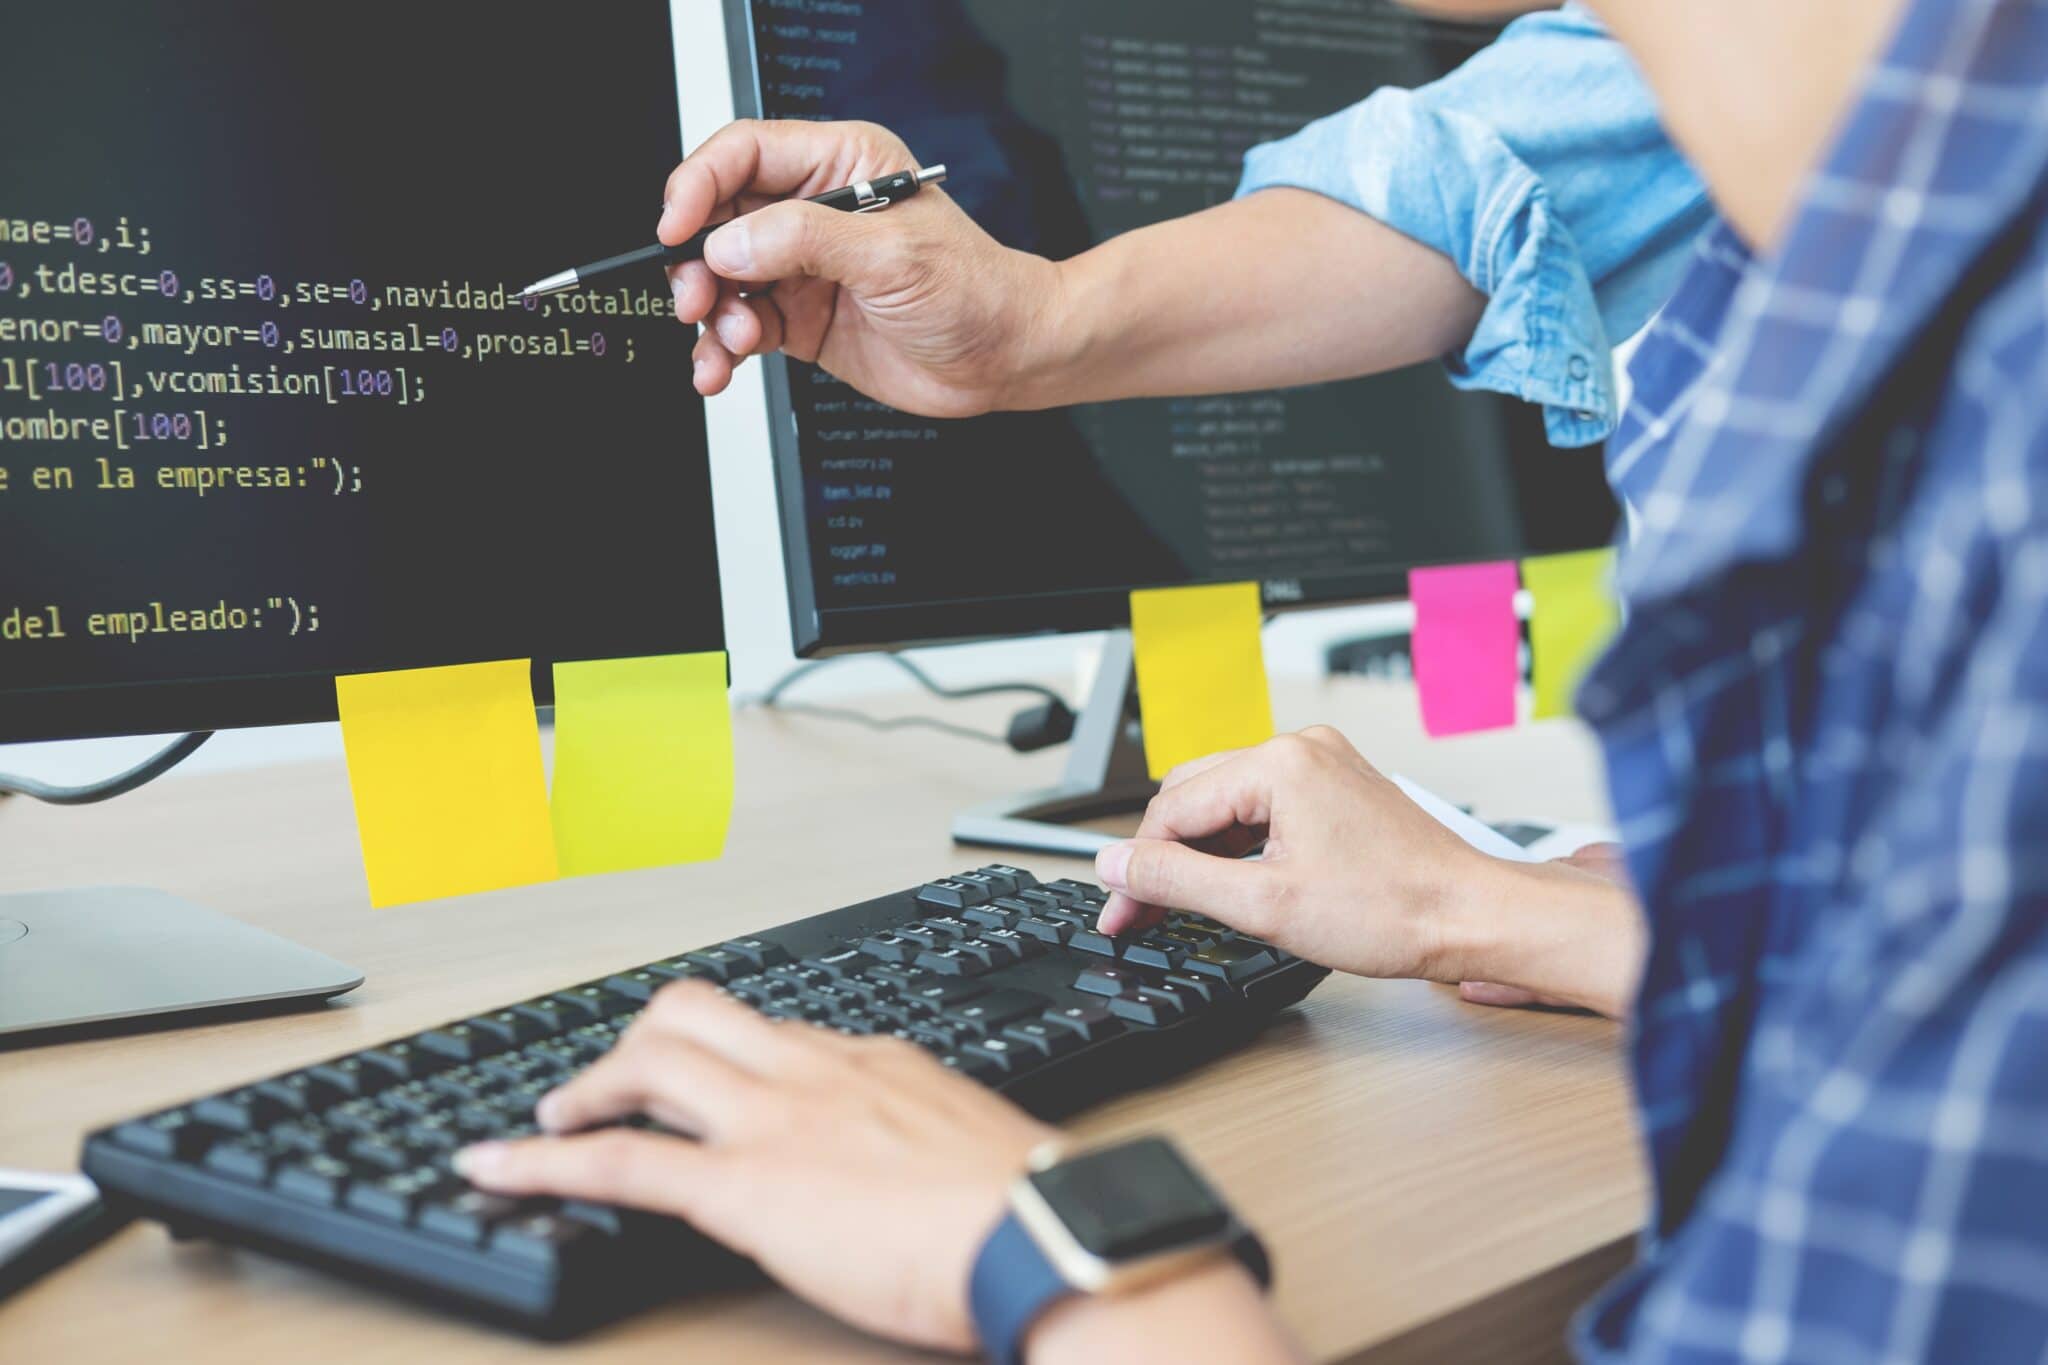 Programmer Outsource Developer Team coding technologies Website design. Mobile Application Software, Cyber space concept.